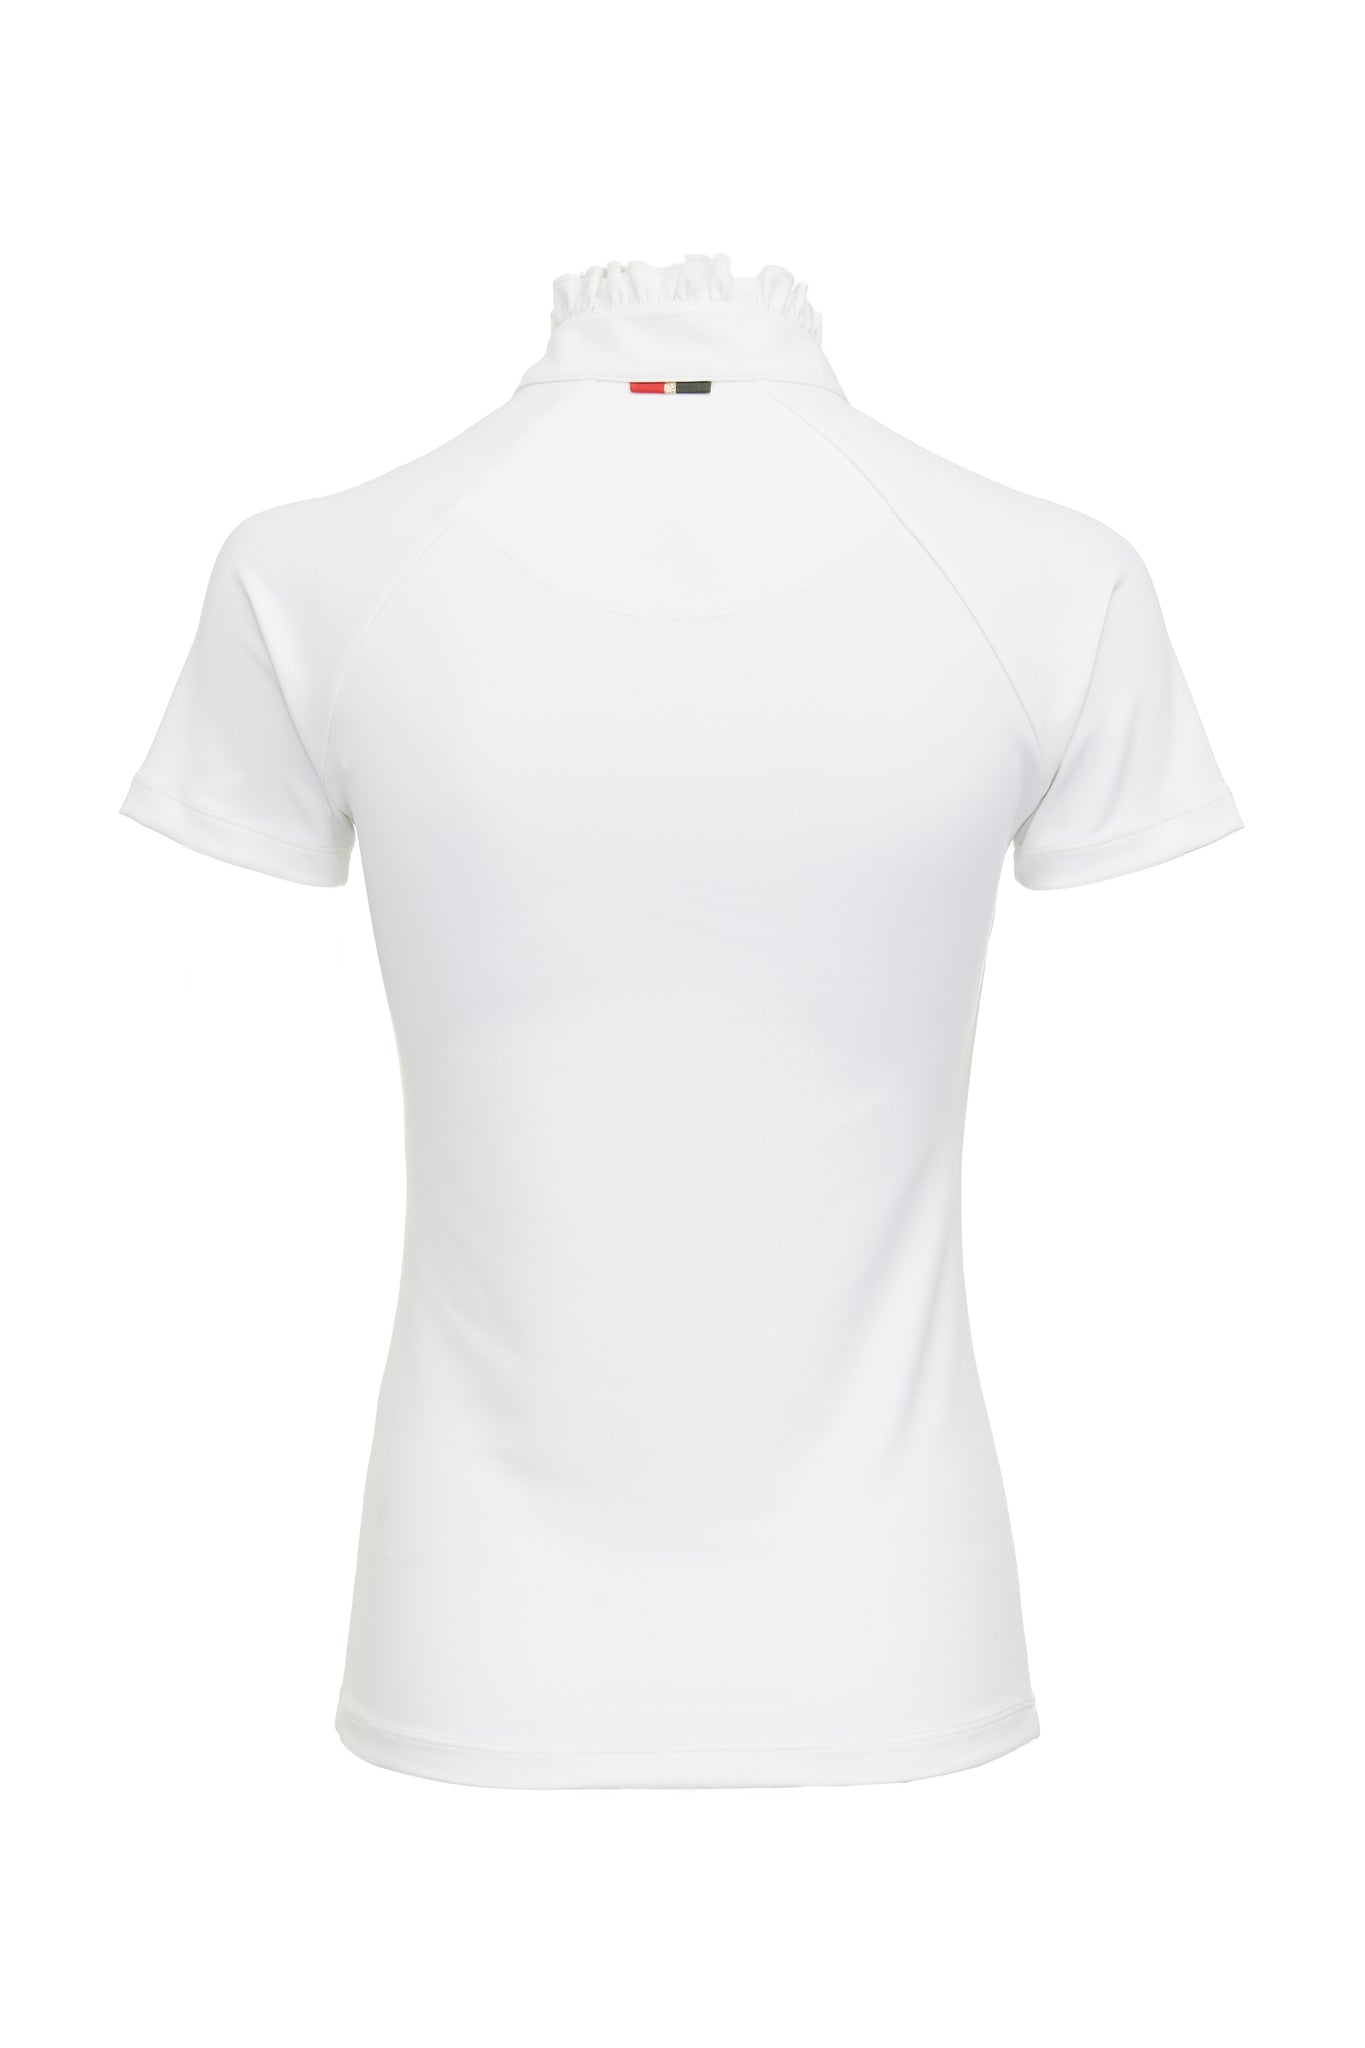 Silverton Show Shirt (White)